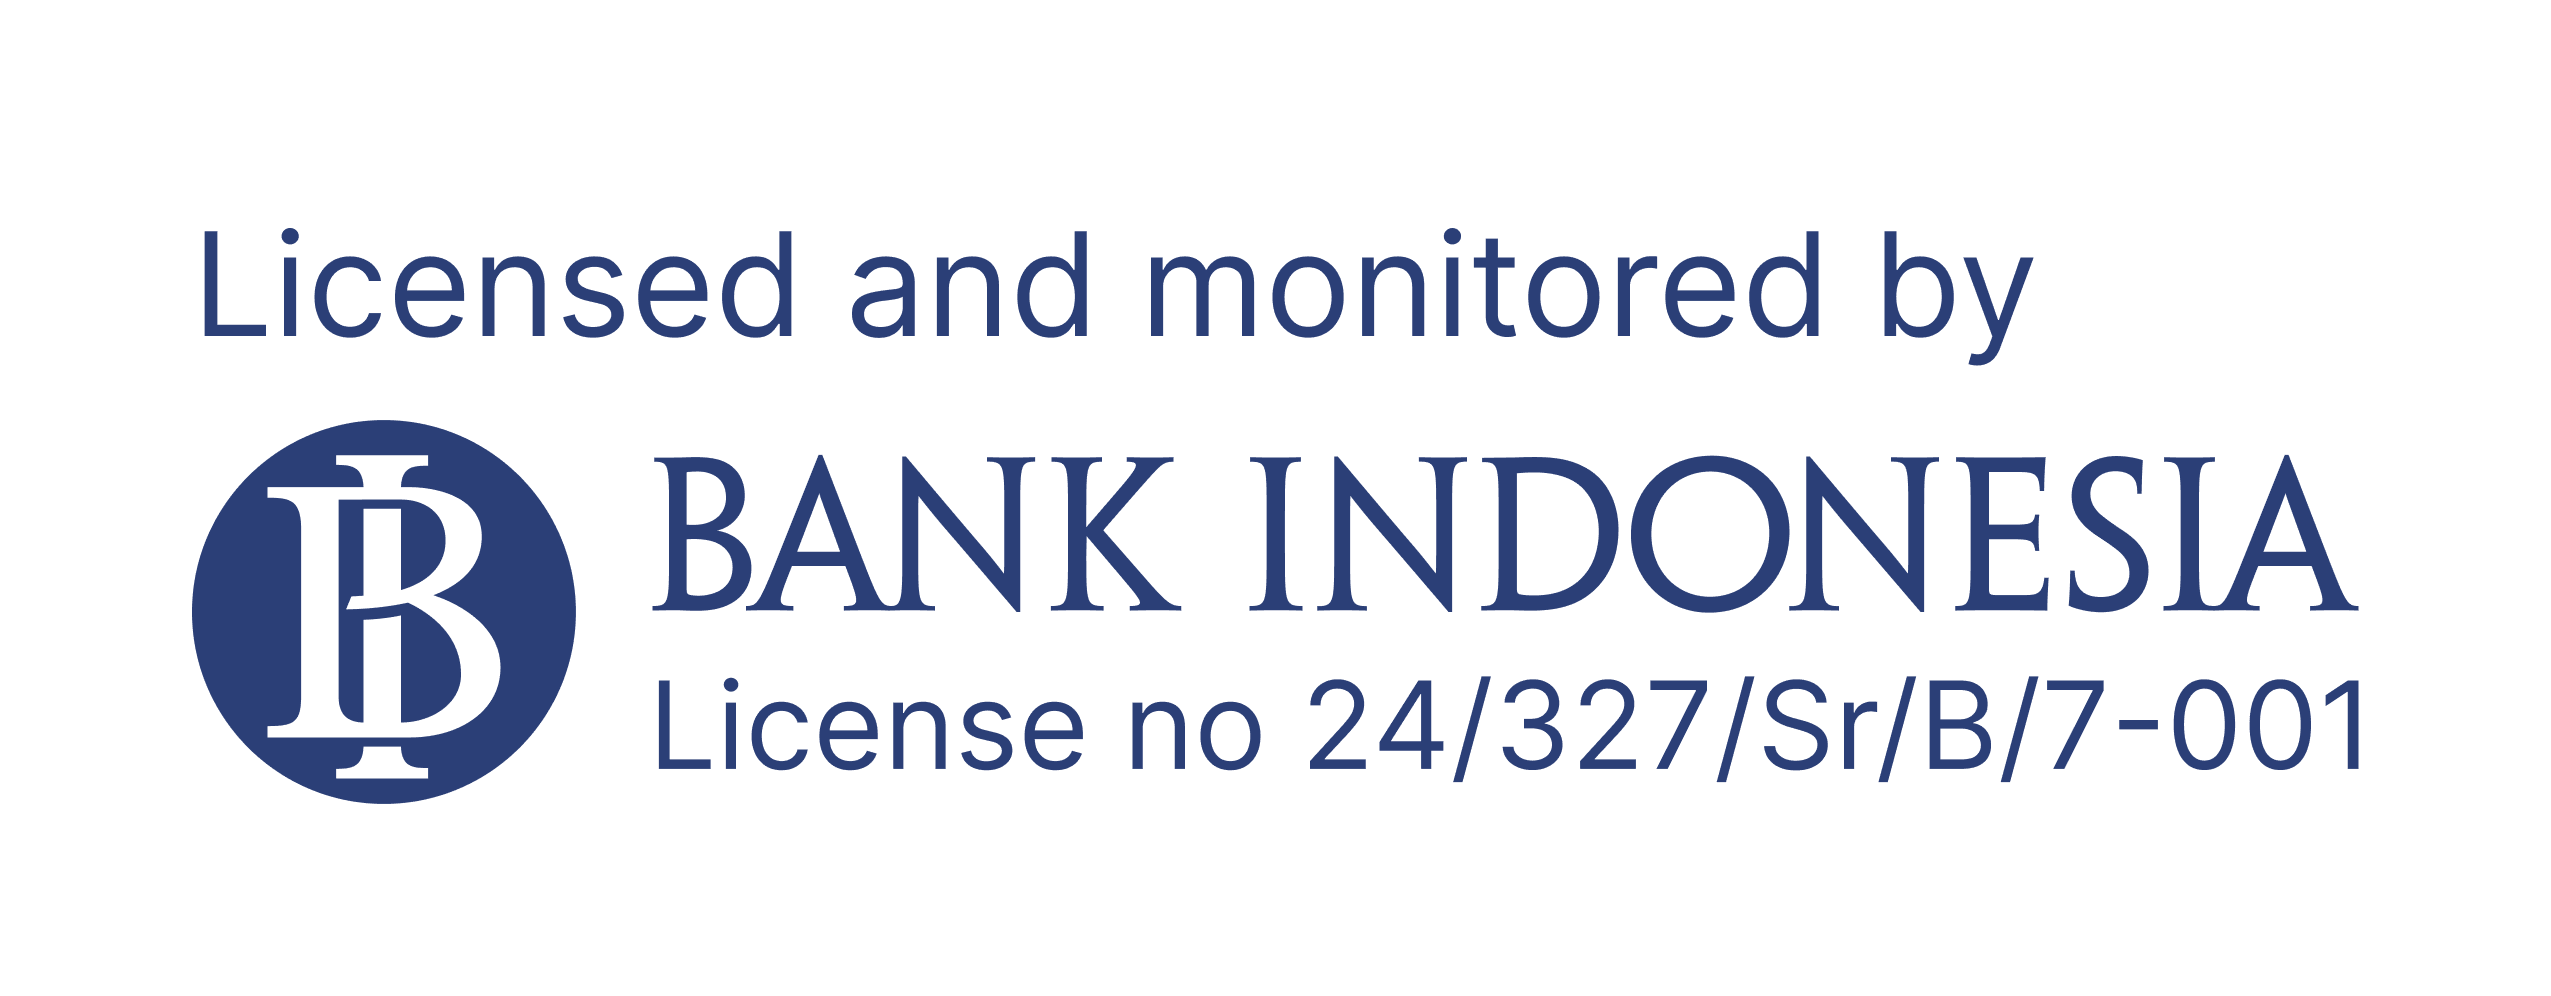 logo-bank-indonesia-easylink-for-business